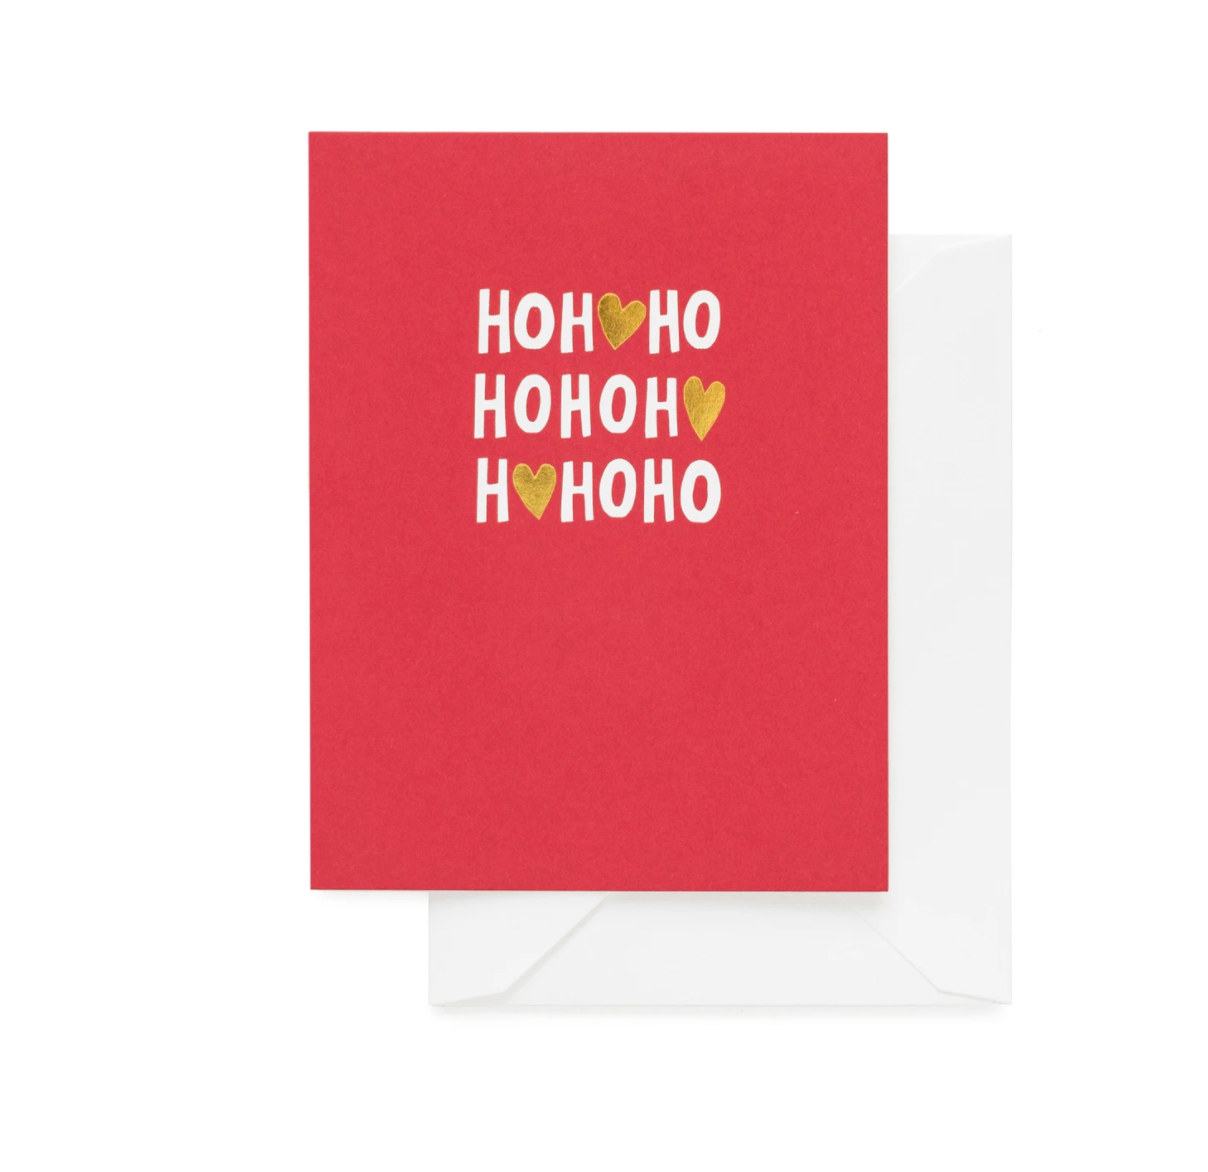 HOHOHeart Greeting card